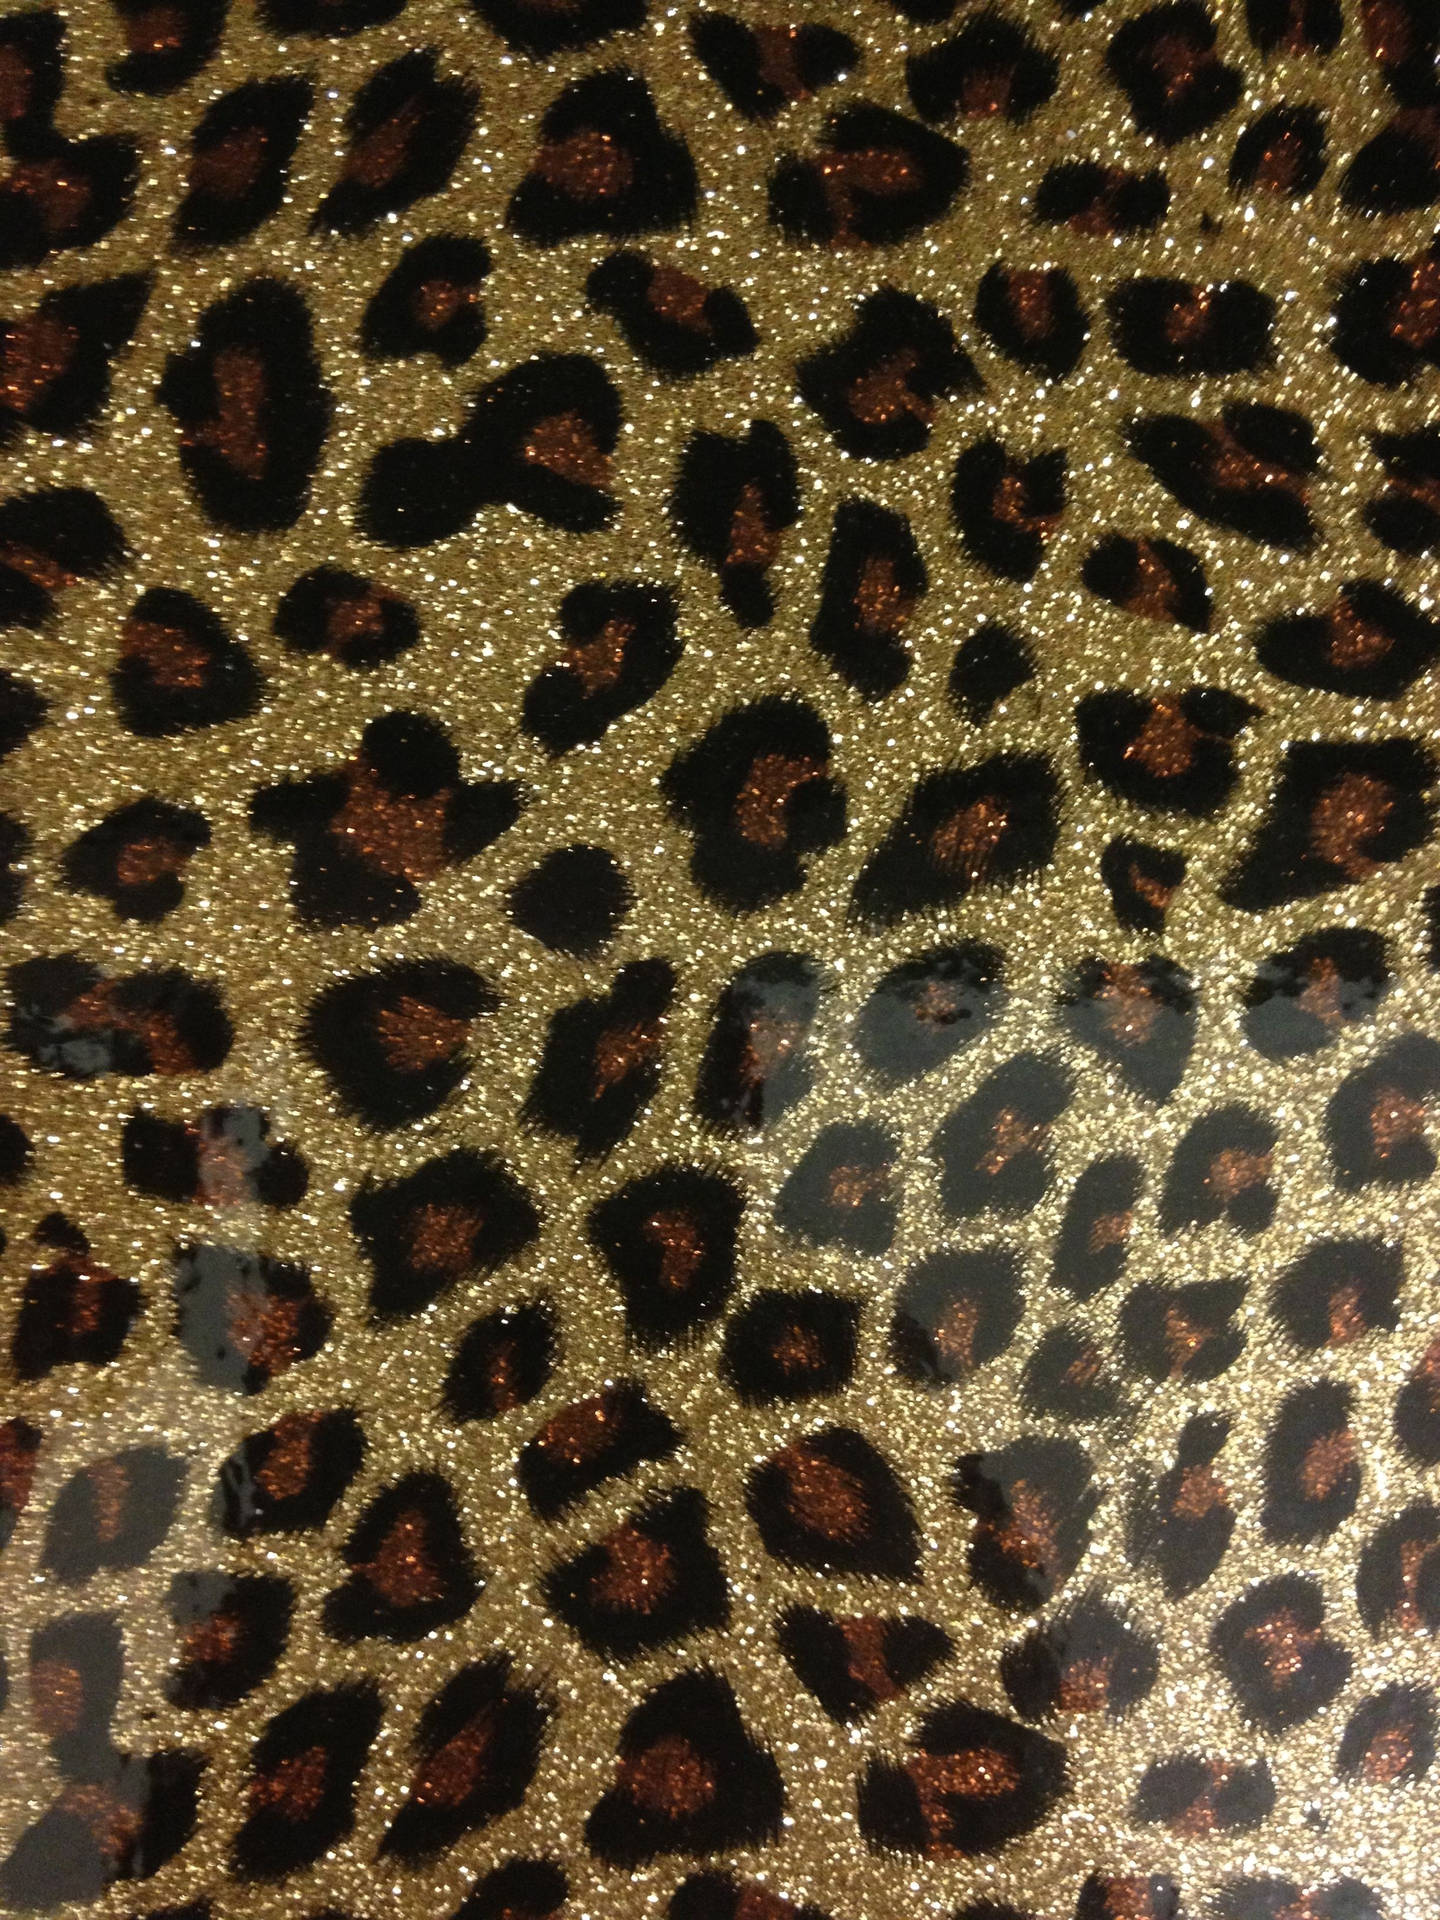 Download Gold Brown Glittery Leopard Print Wallpaper